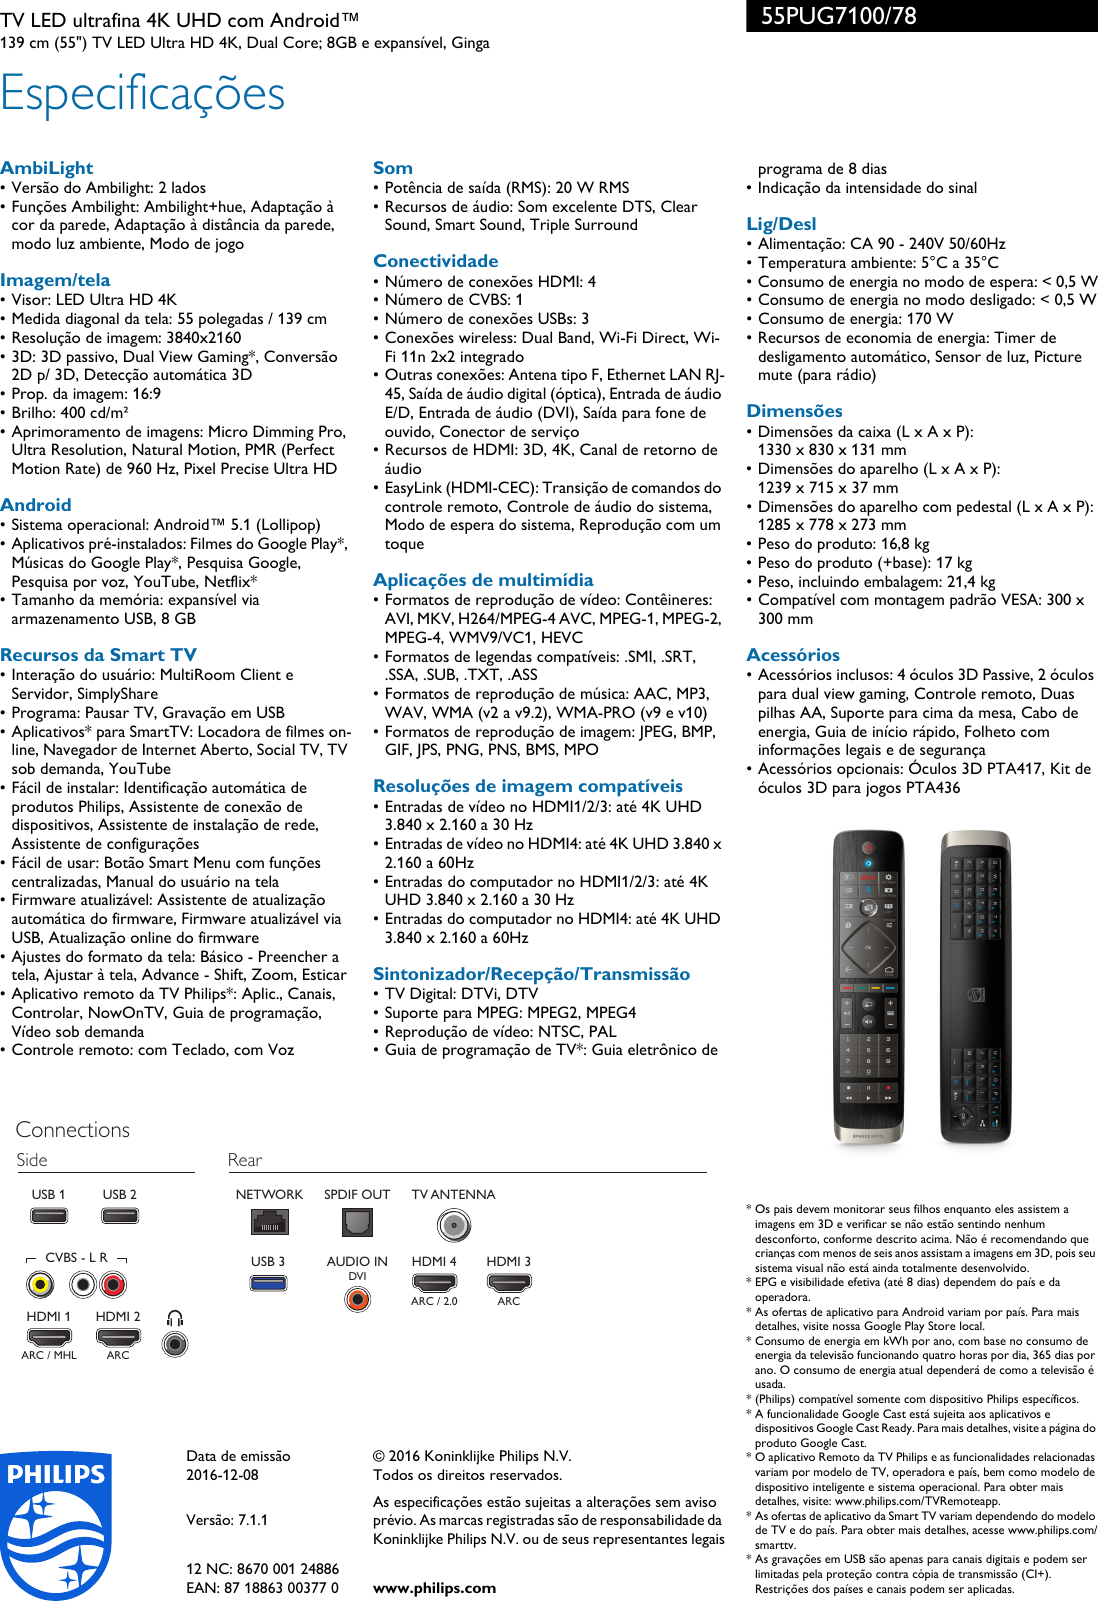 Page 3 of 3 - Philips 55PUG7100/78 TV LED Ultrafina 4K UHD Com Android™com Ambilight Bilateral E Pixel Precise Ultra HD User Manual Folheto 55pug7100 78 Pss Brpbr